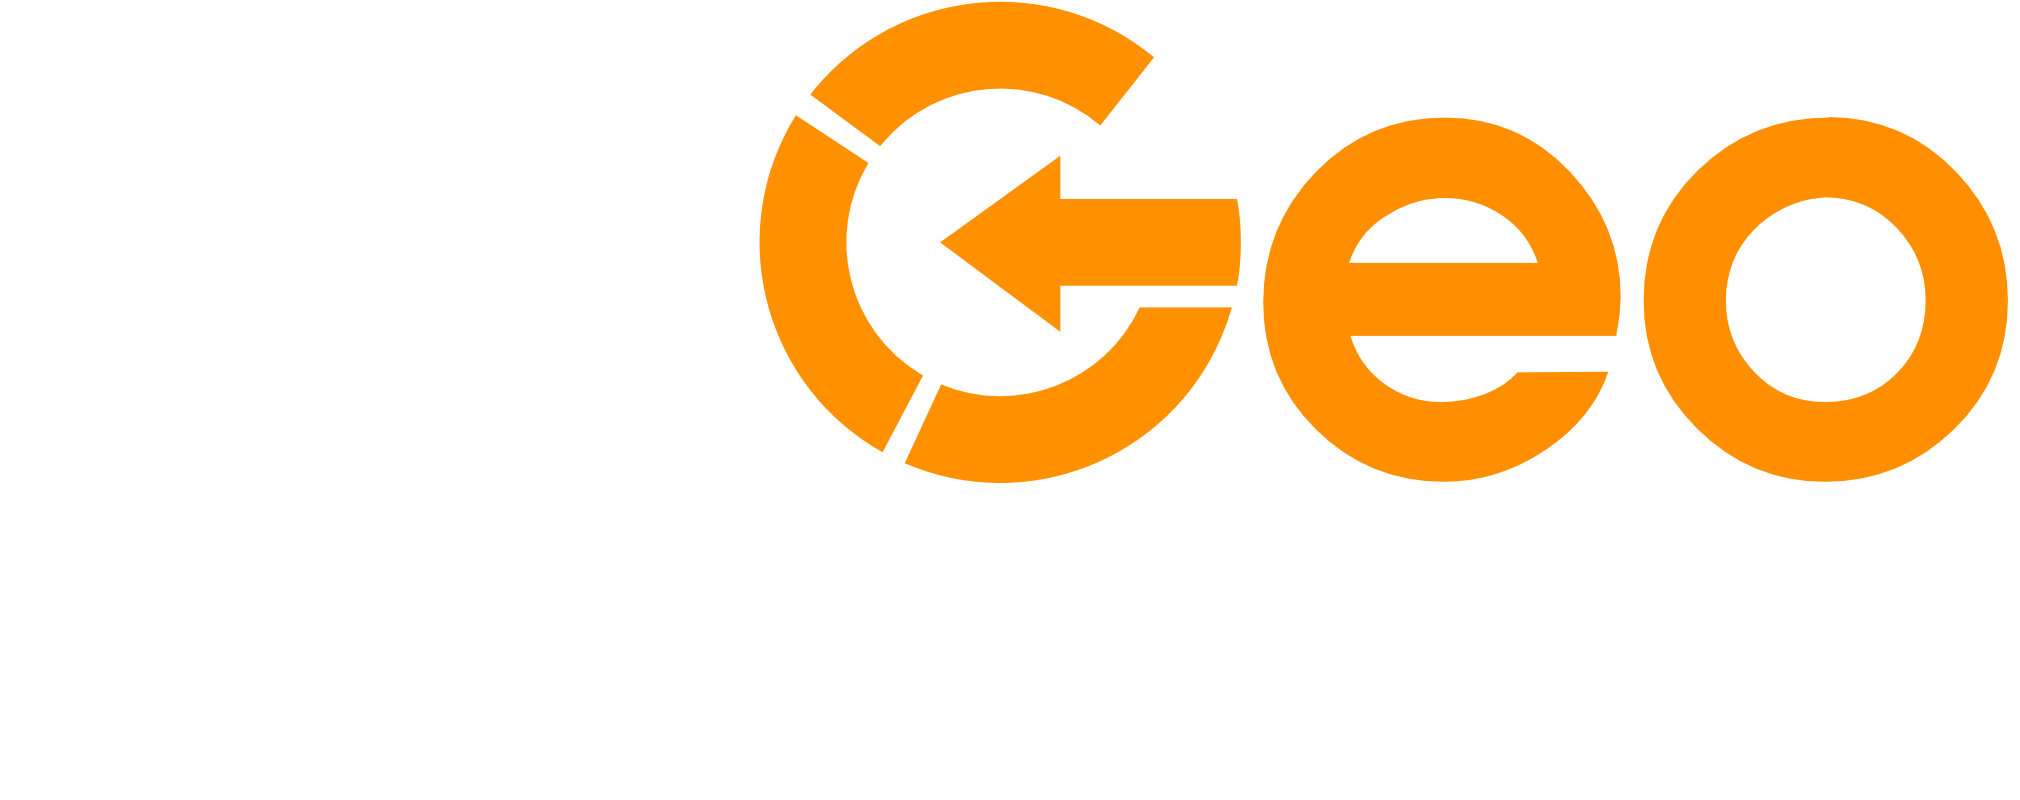 logo_forgeo_2.0_